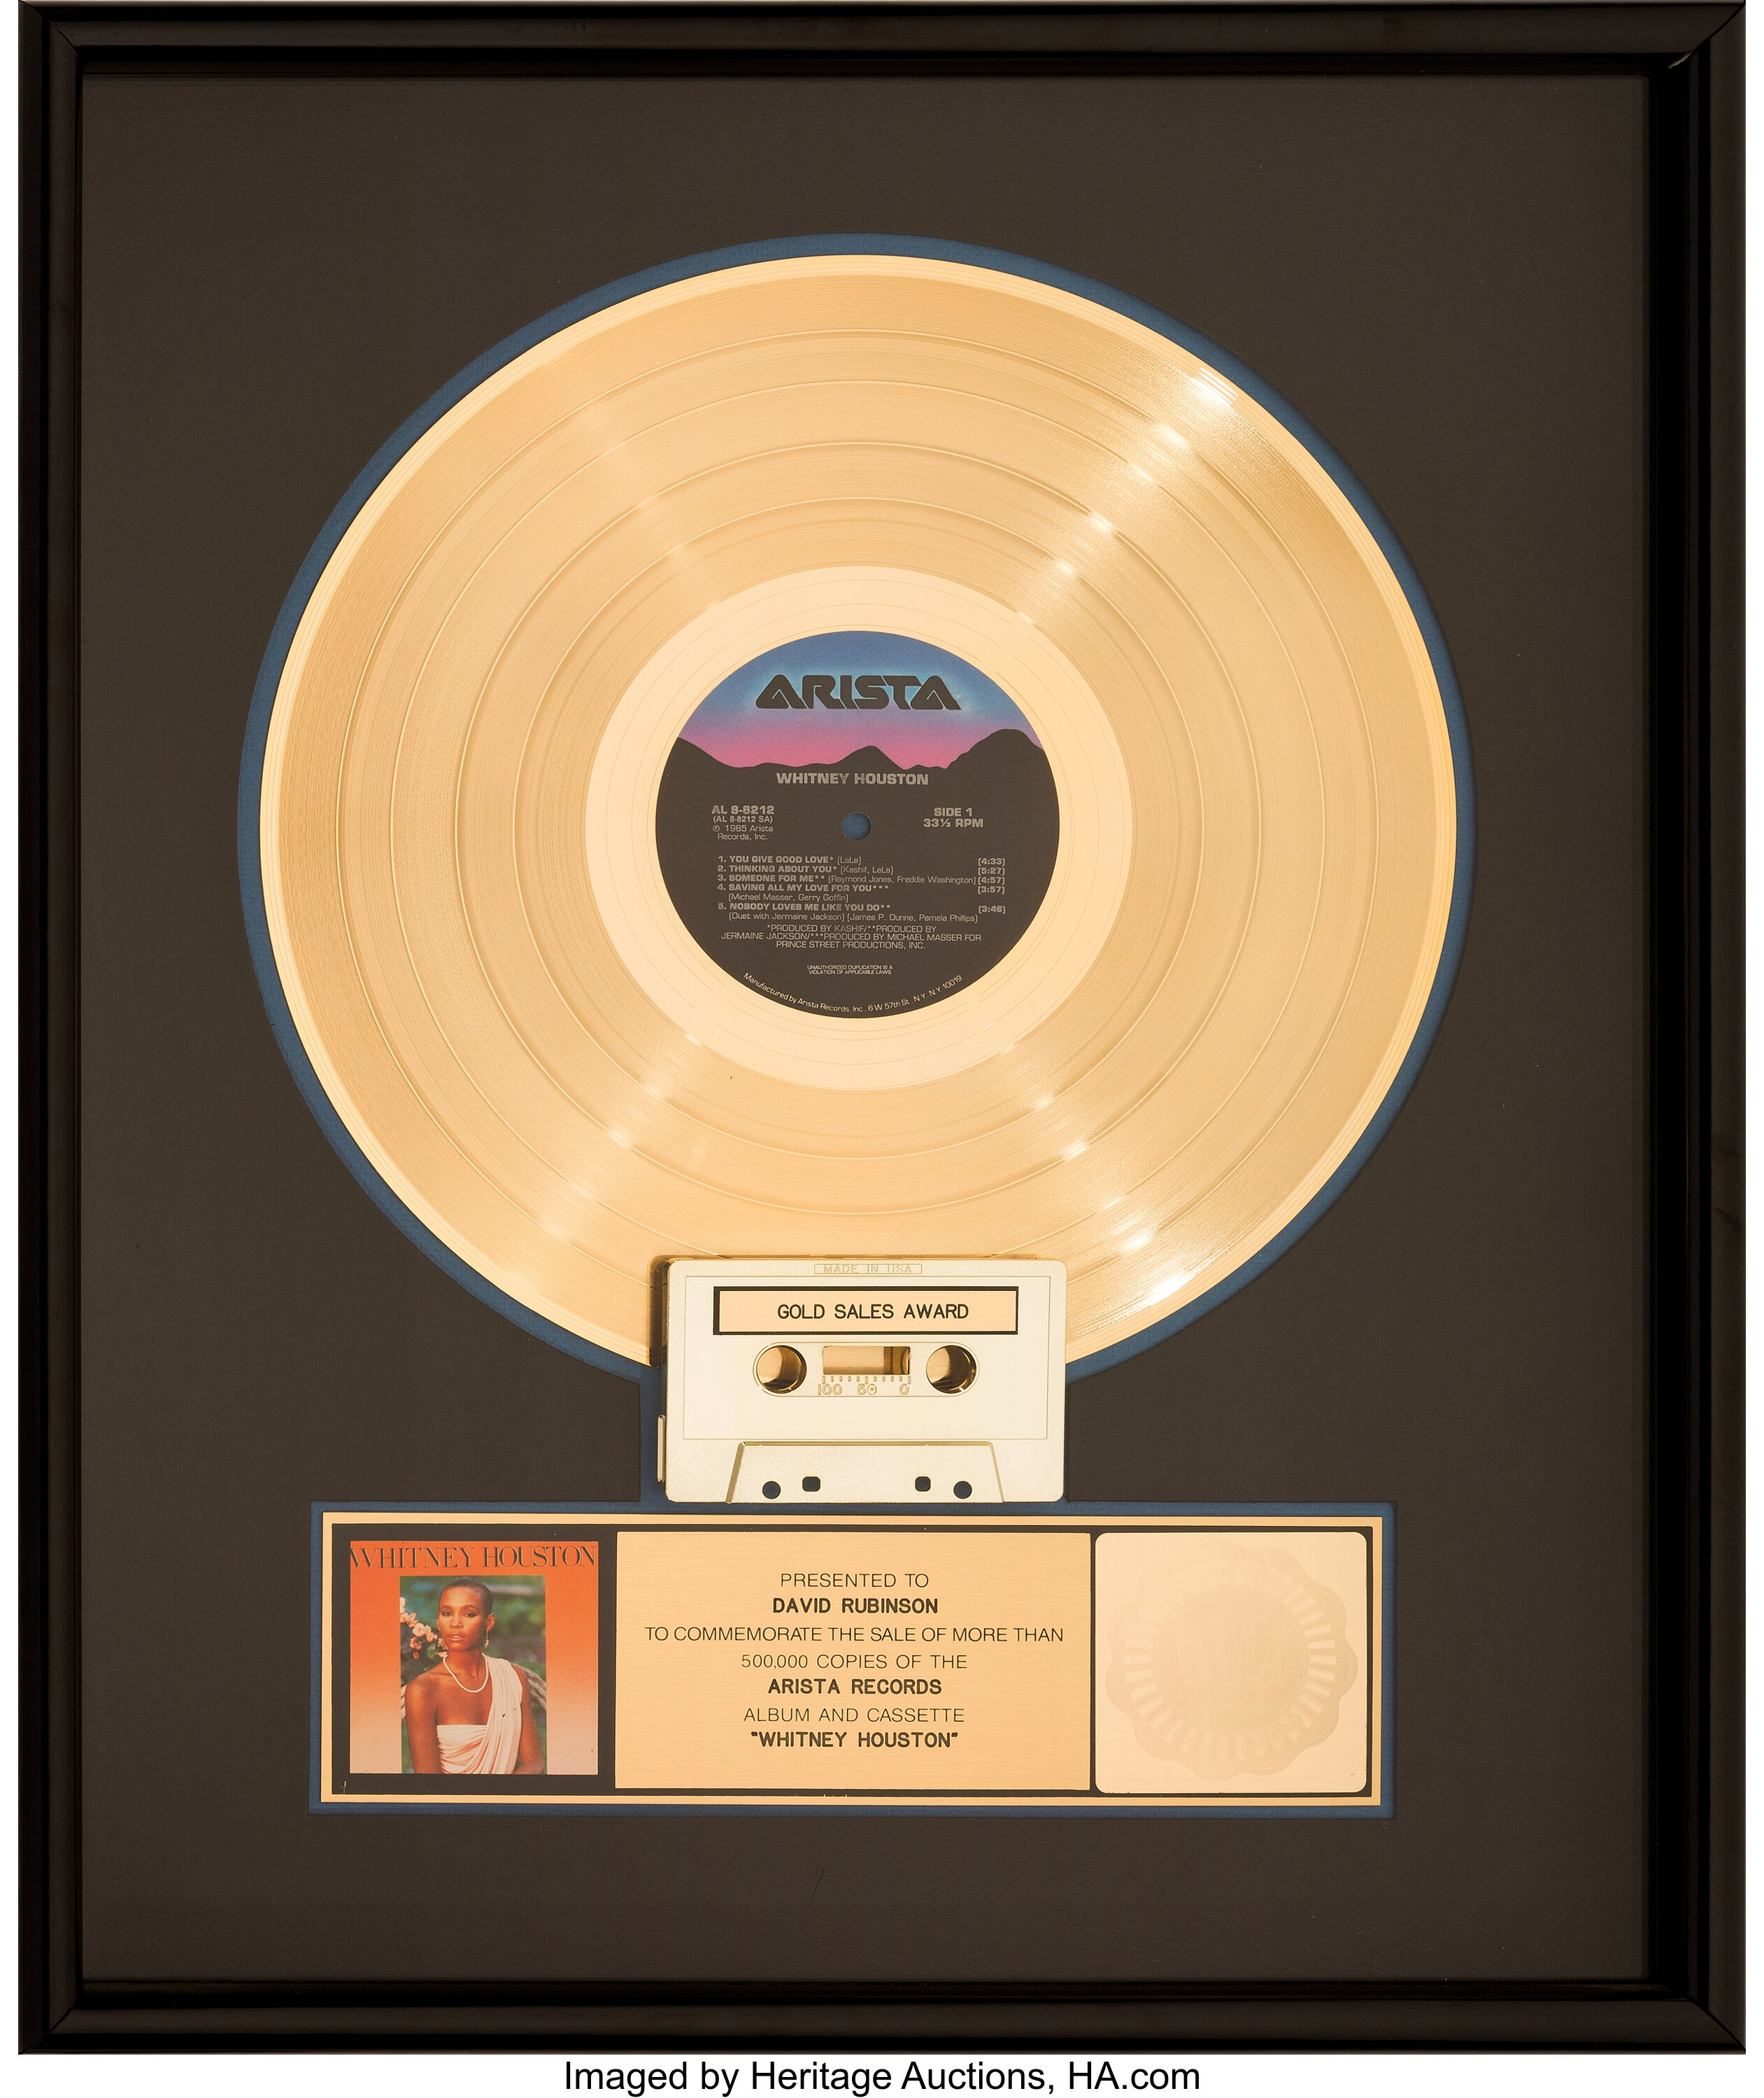 Whitney Houston Riaa Gold Record Sales Award Arista Al 8 12 Lot 364 Heritage Auctions